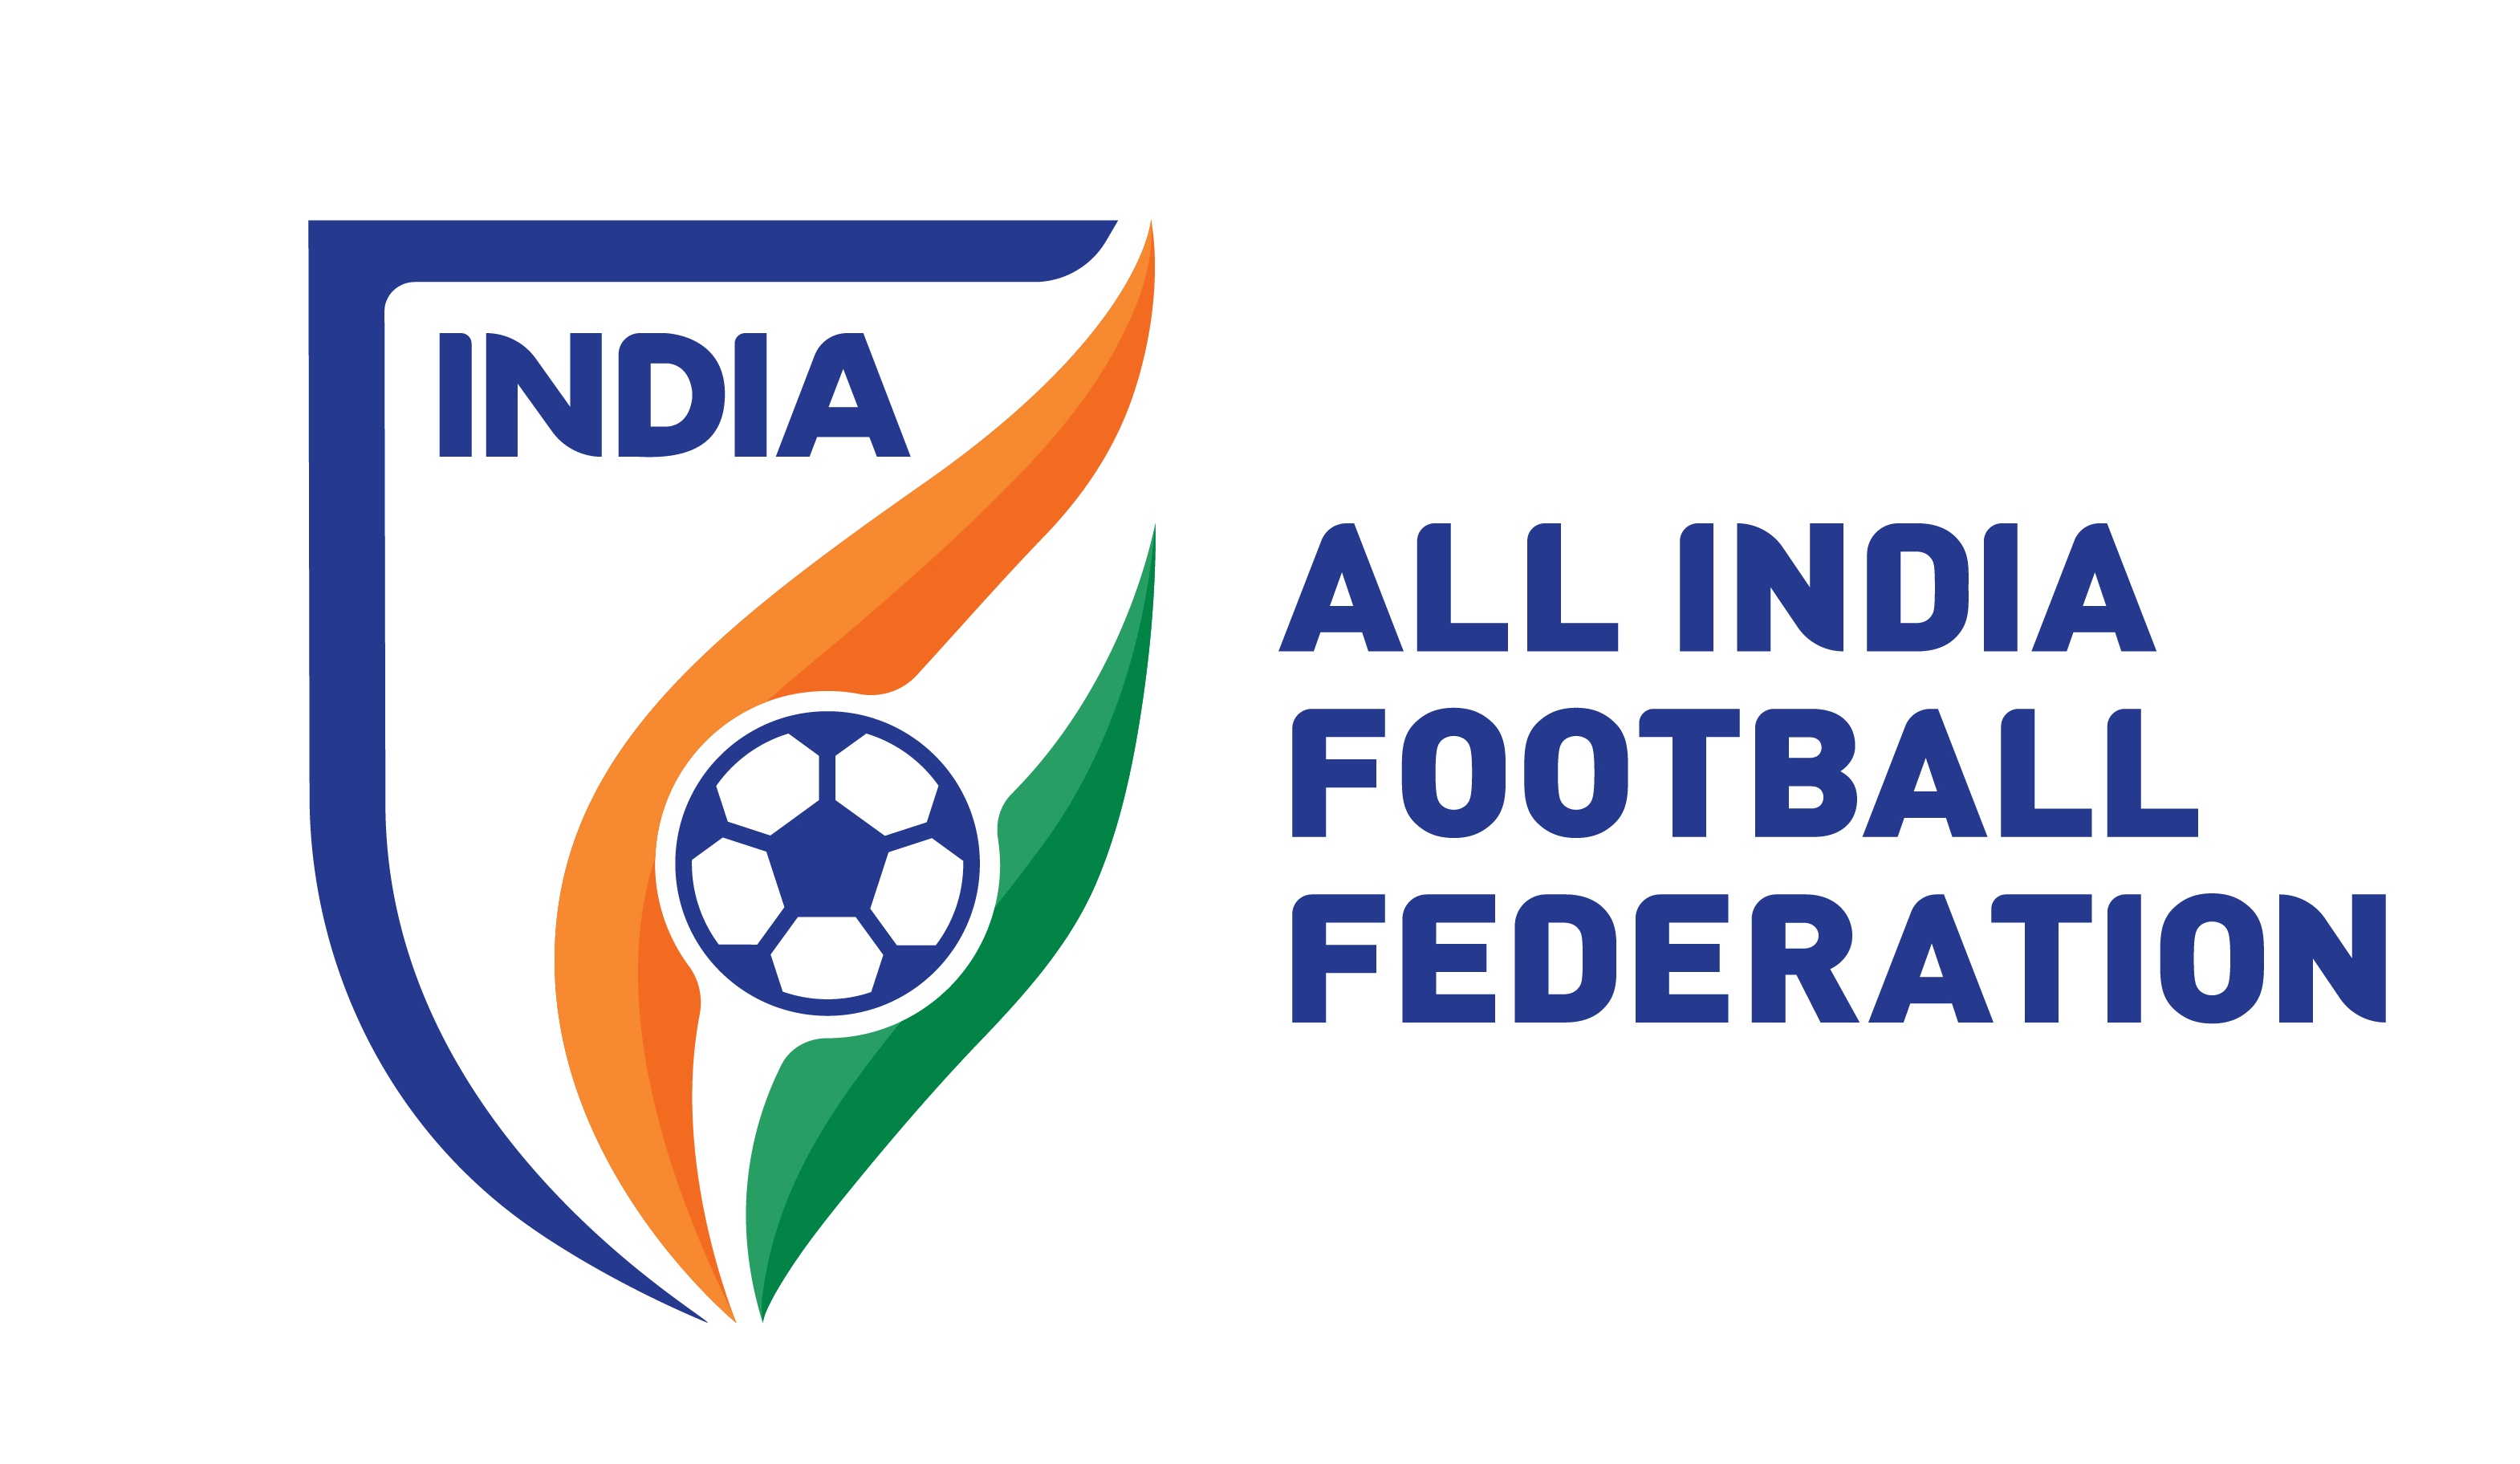 All India Football federation